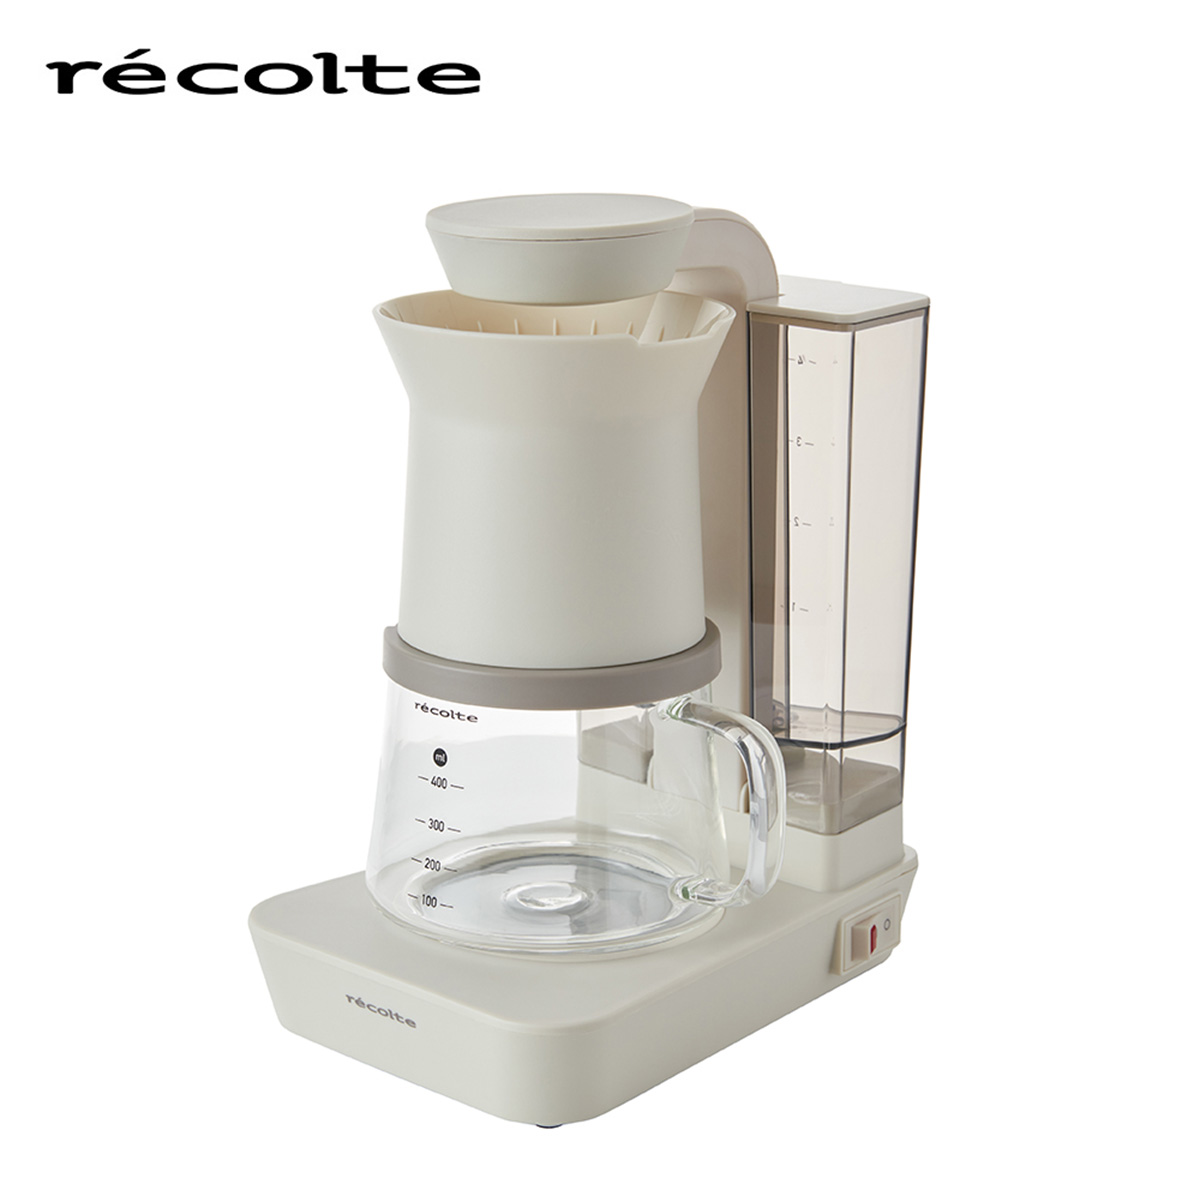 recolte(レコルト) レインドリップコーヒーメーカー ホワイト RDC-1(W)